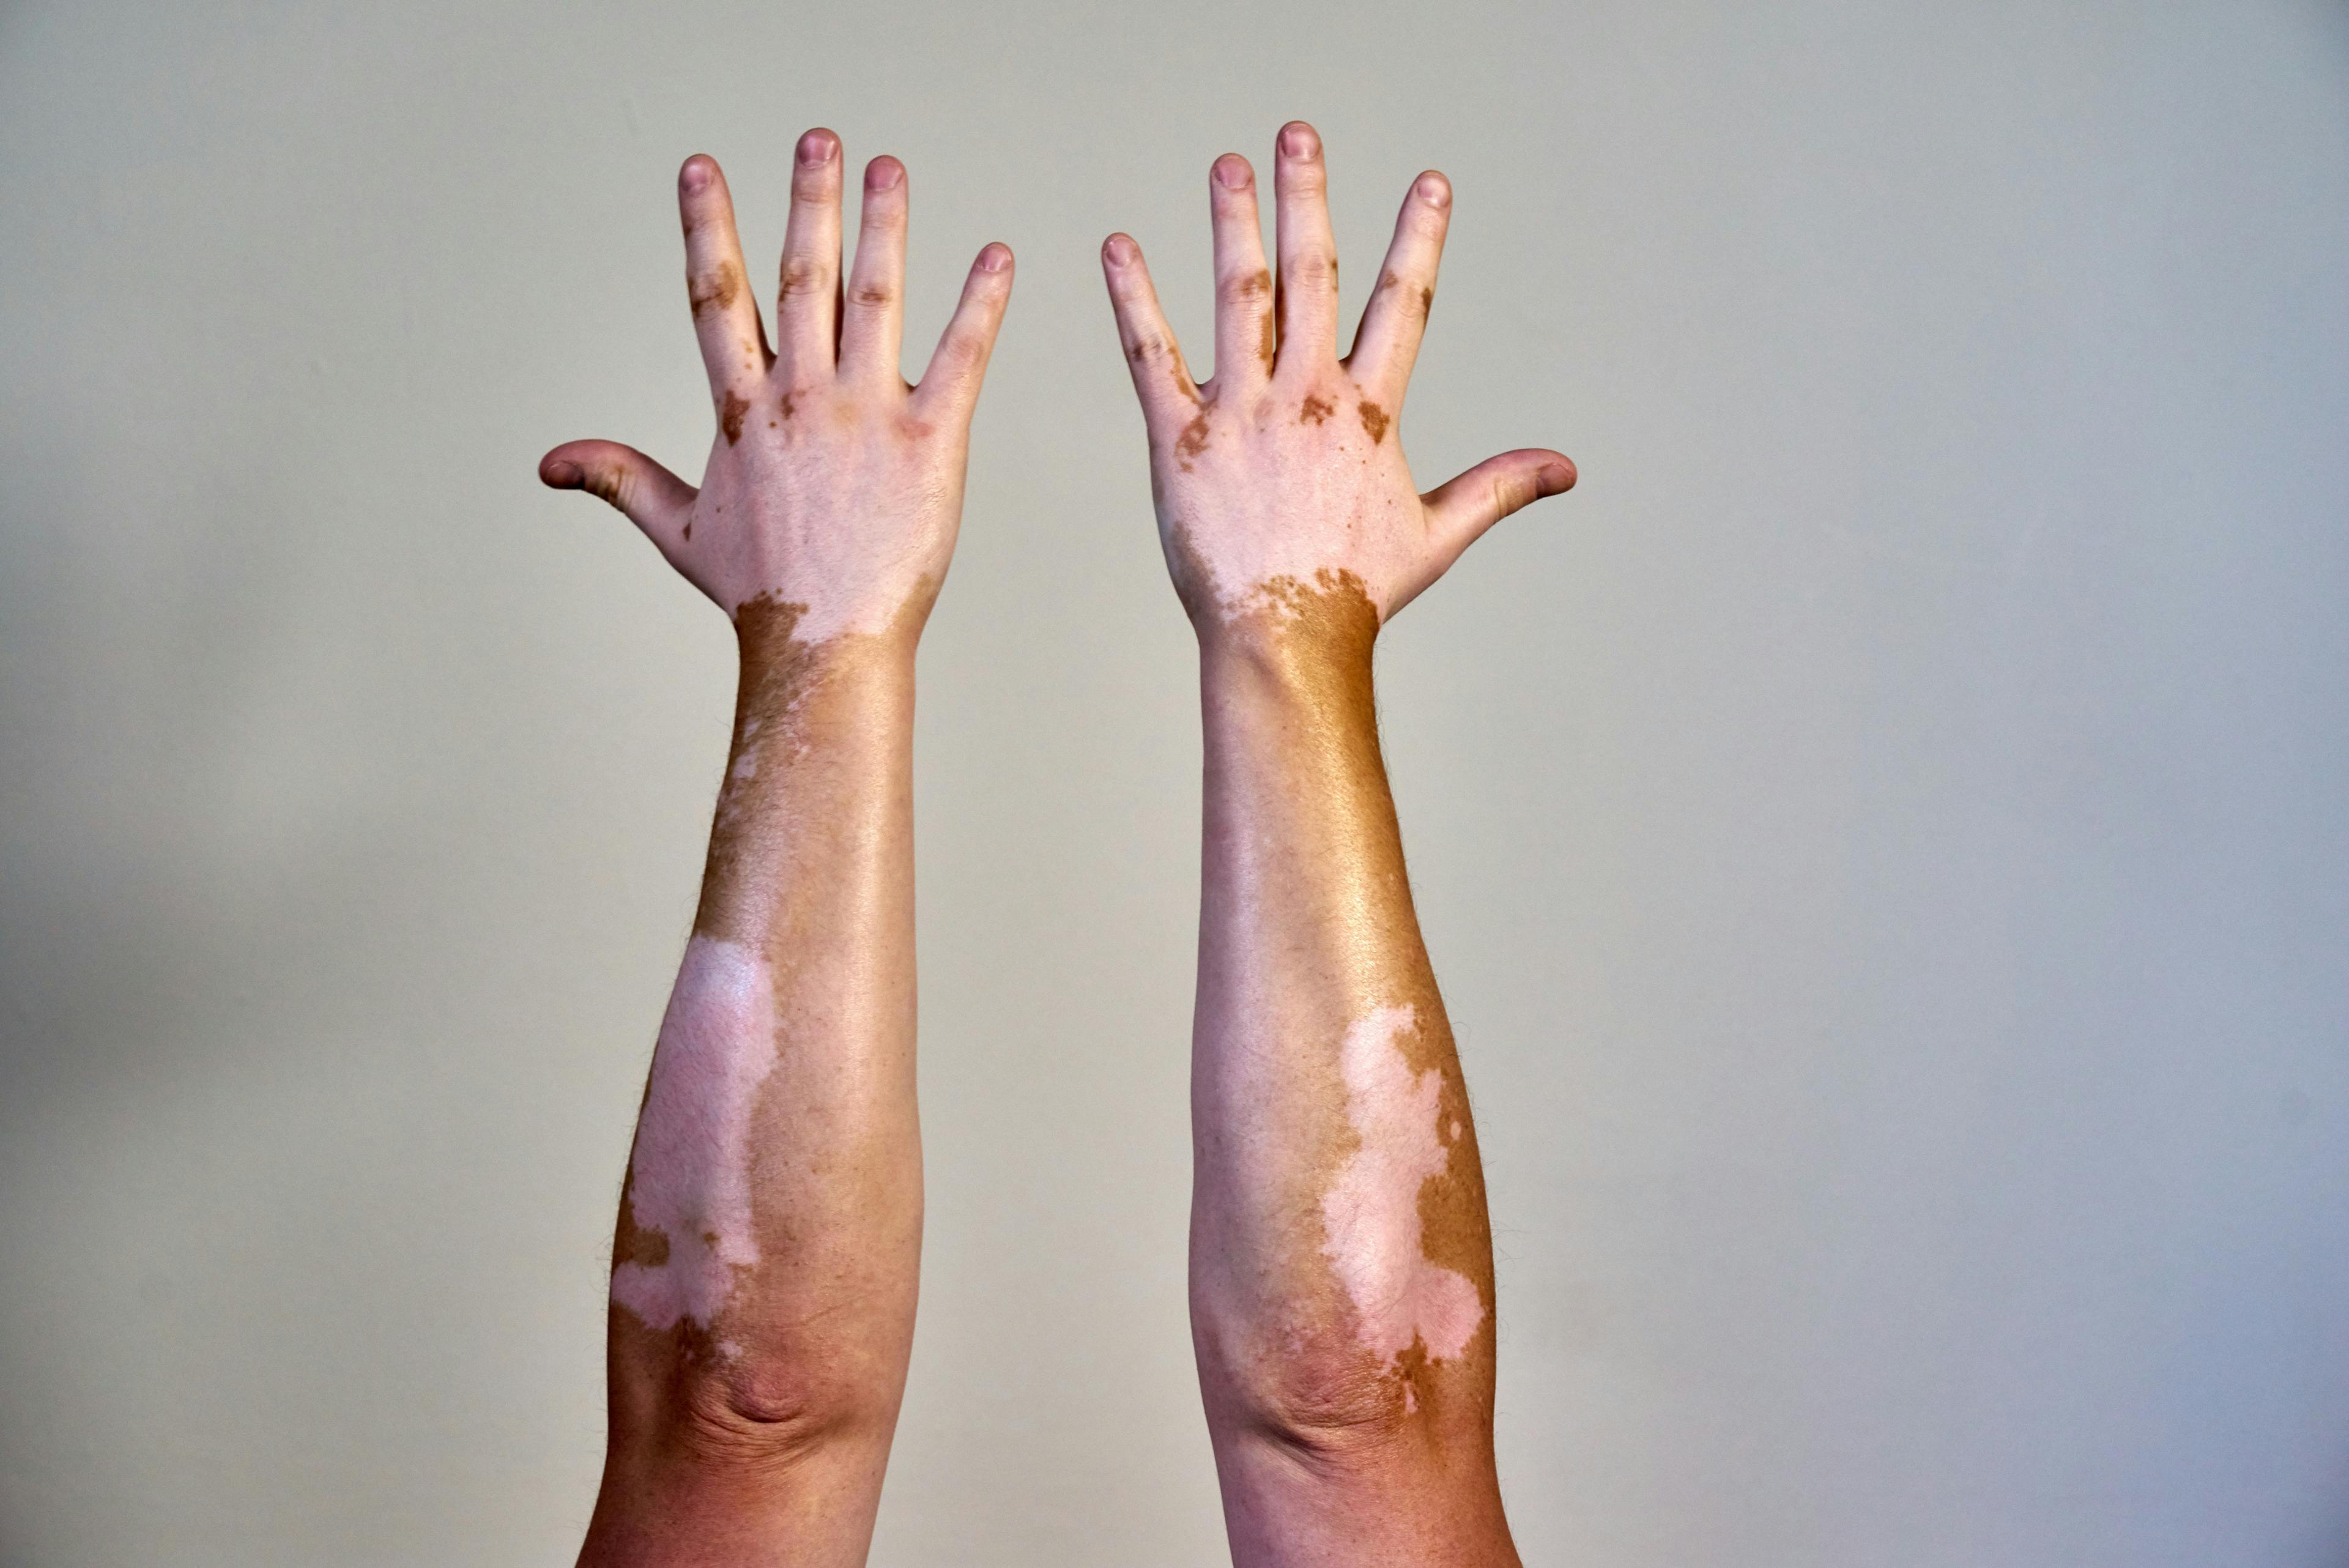 Vitiligo skin disease on male hands | Image Credit: Chris West/Wirestock Creators - stock.adobe.com